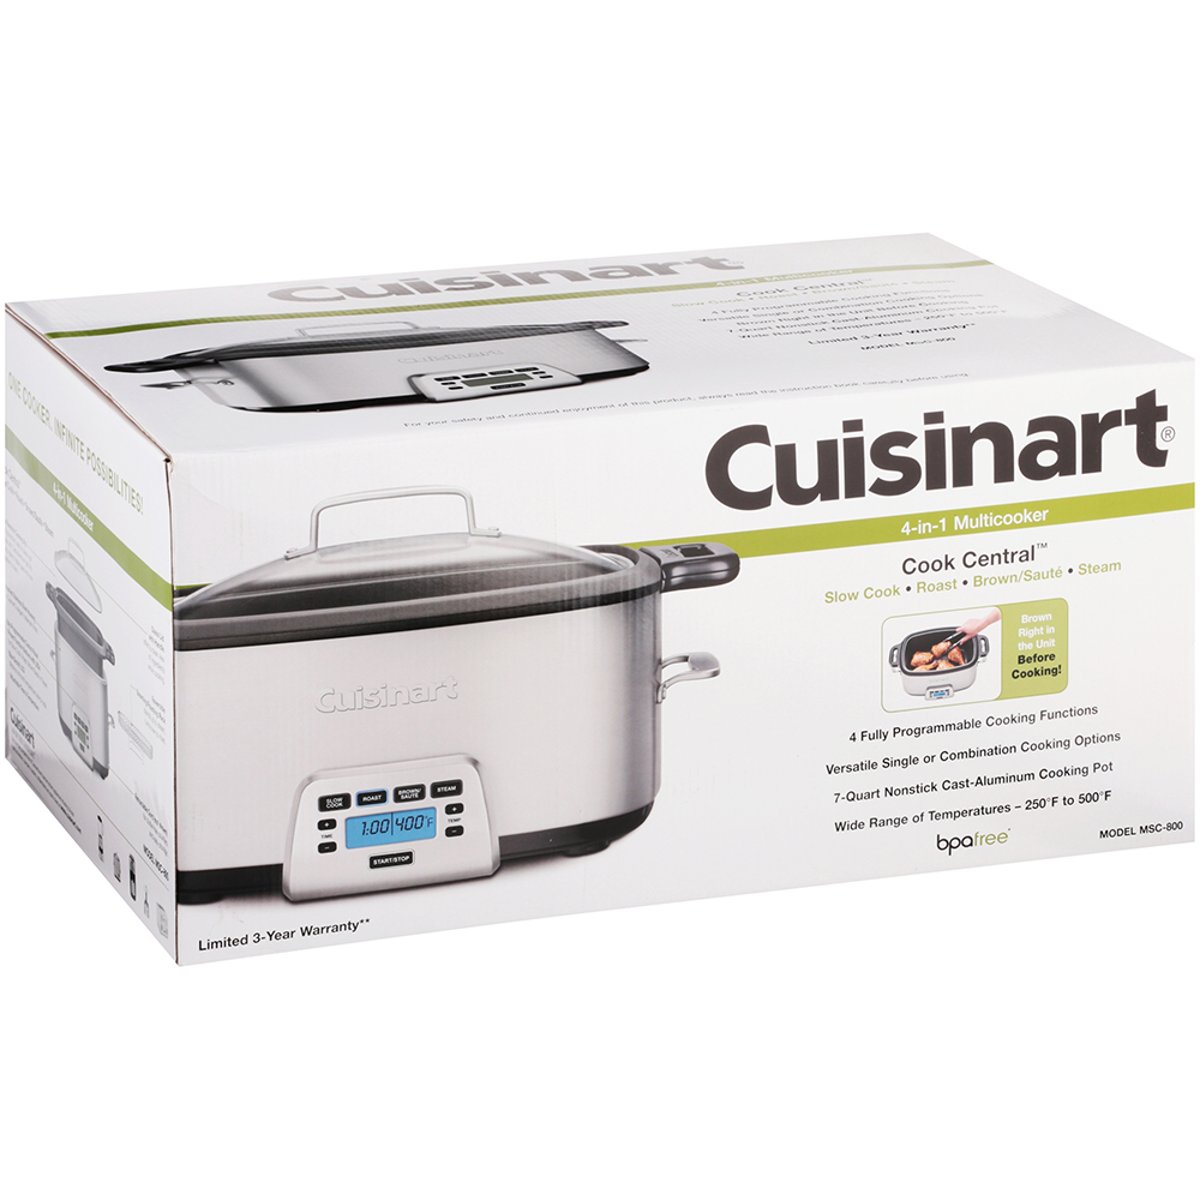 Cuisinart 7 Quart 4-In-1 Cook Central Multicooker